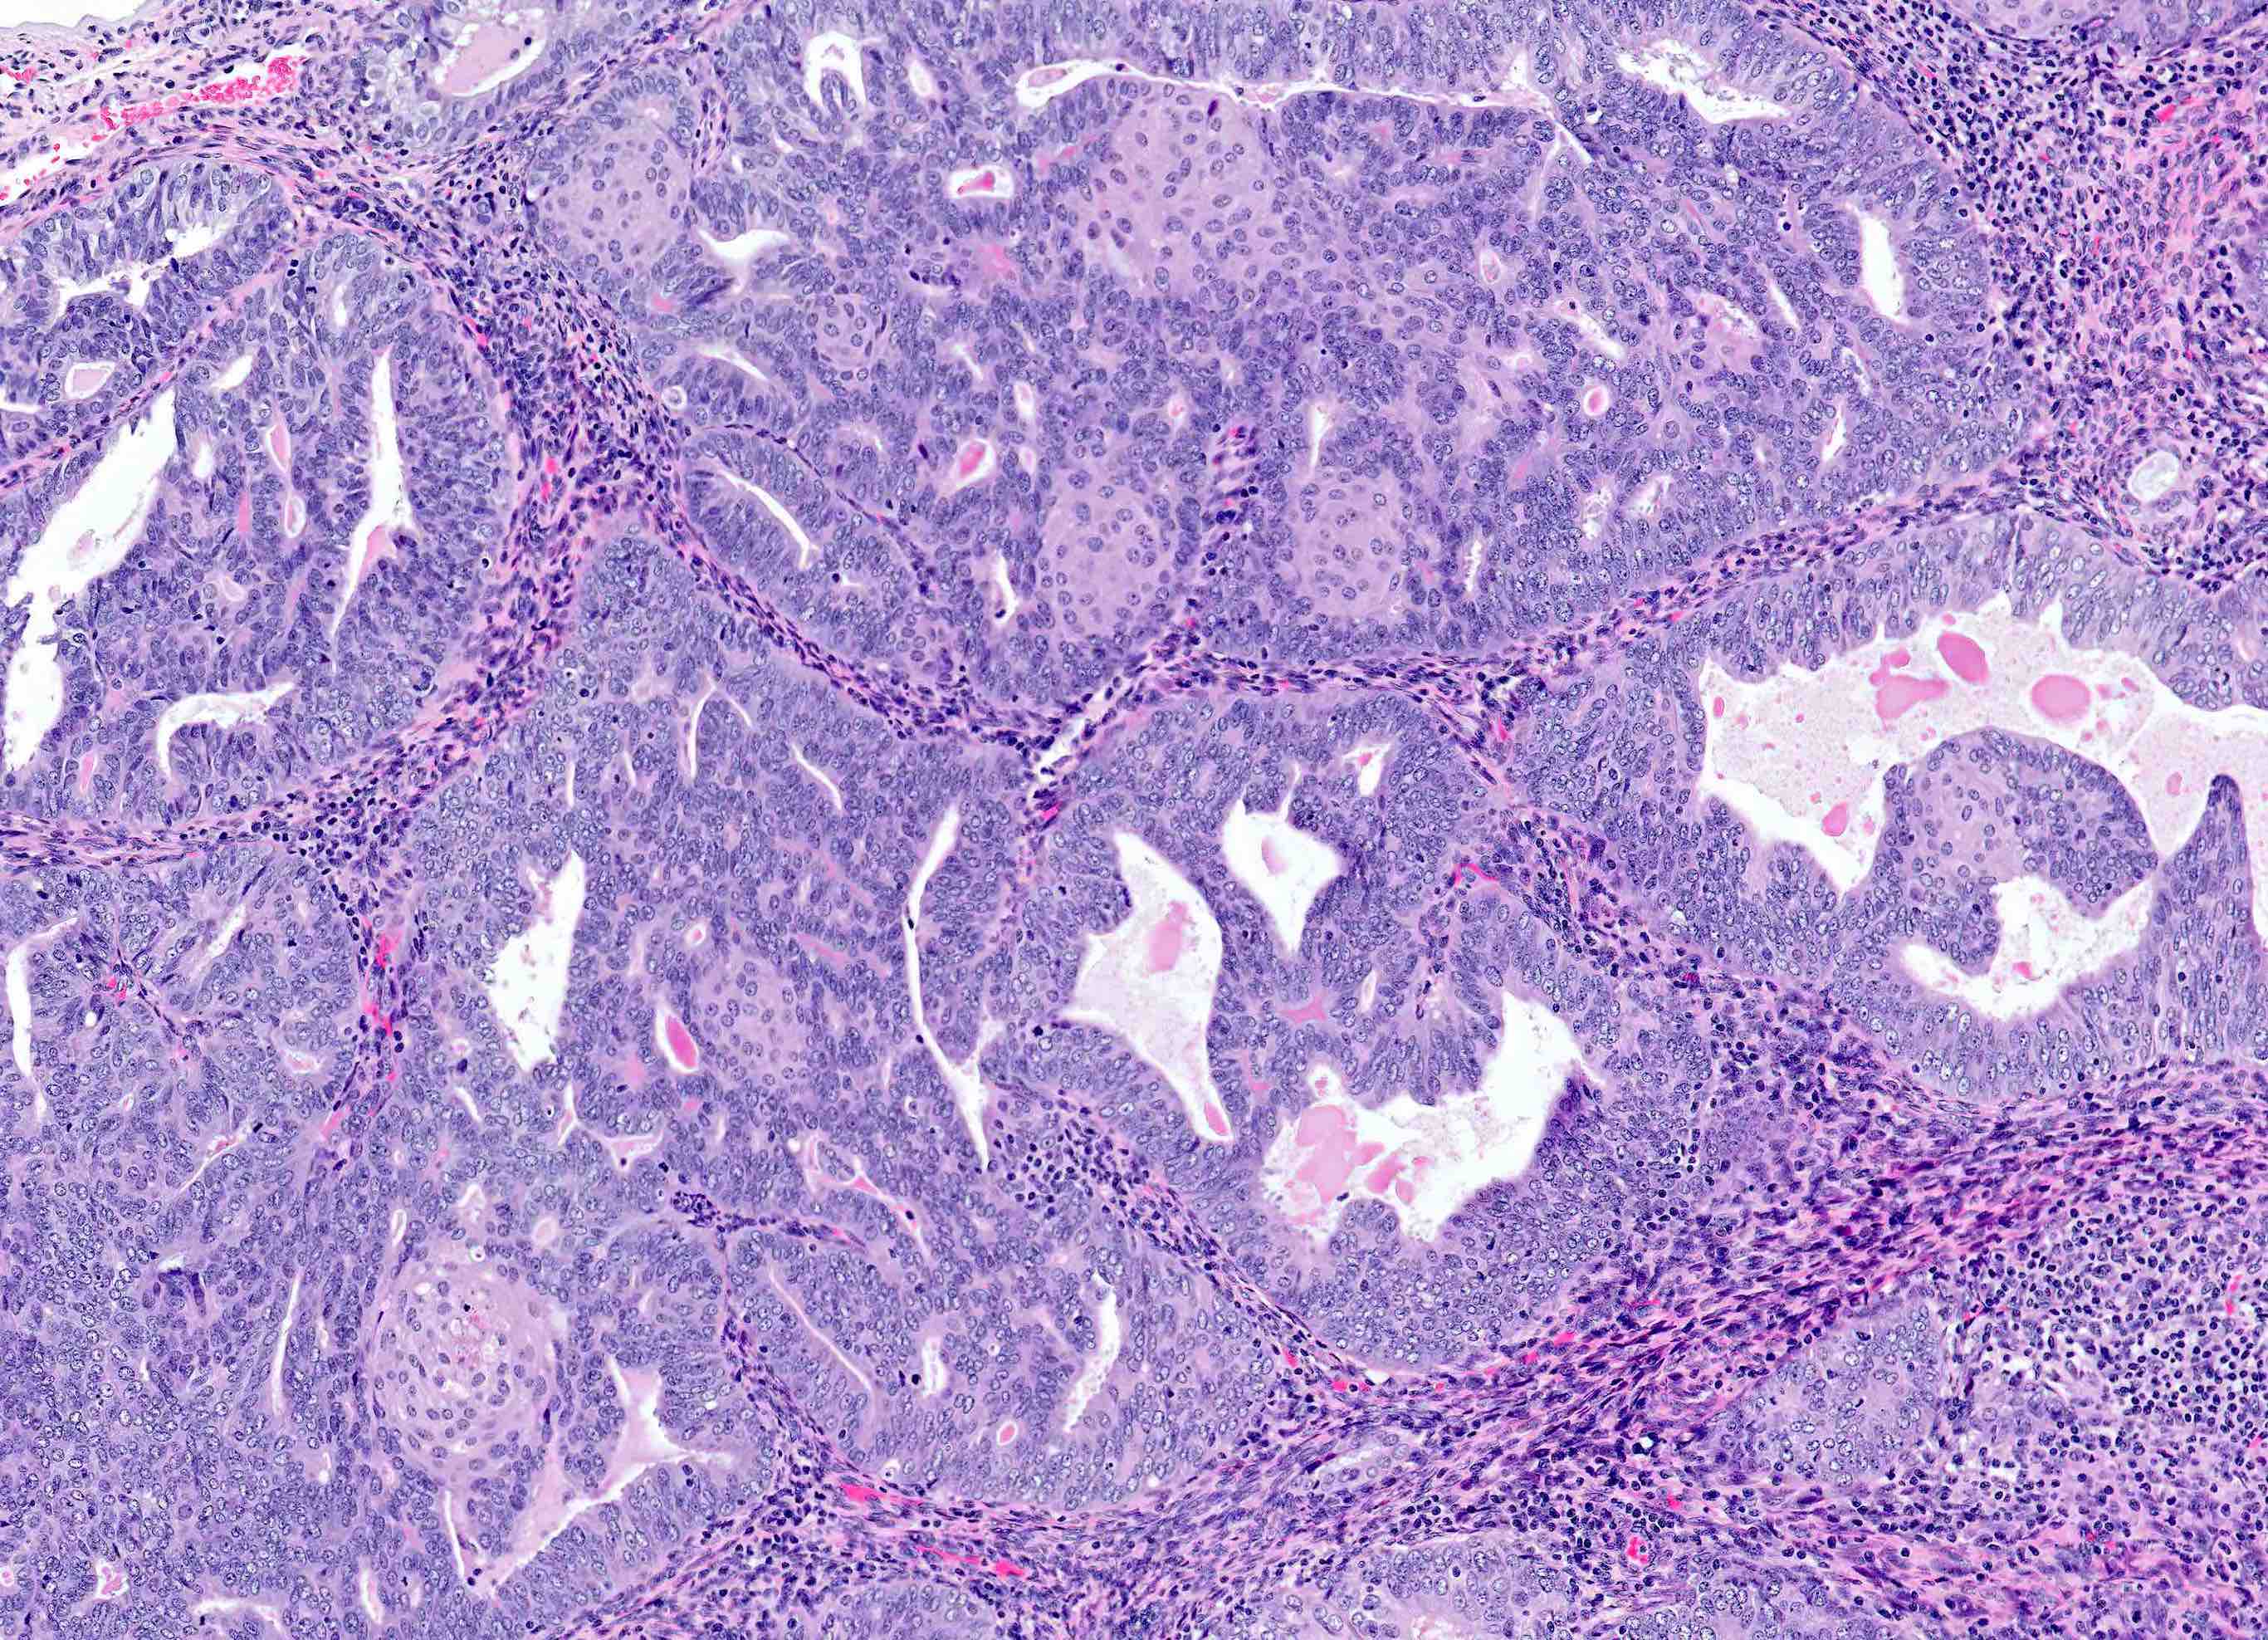 Papiloma urotelial pathology outlines